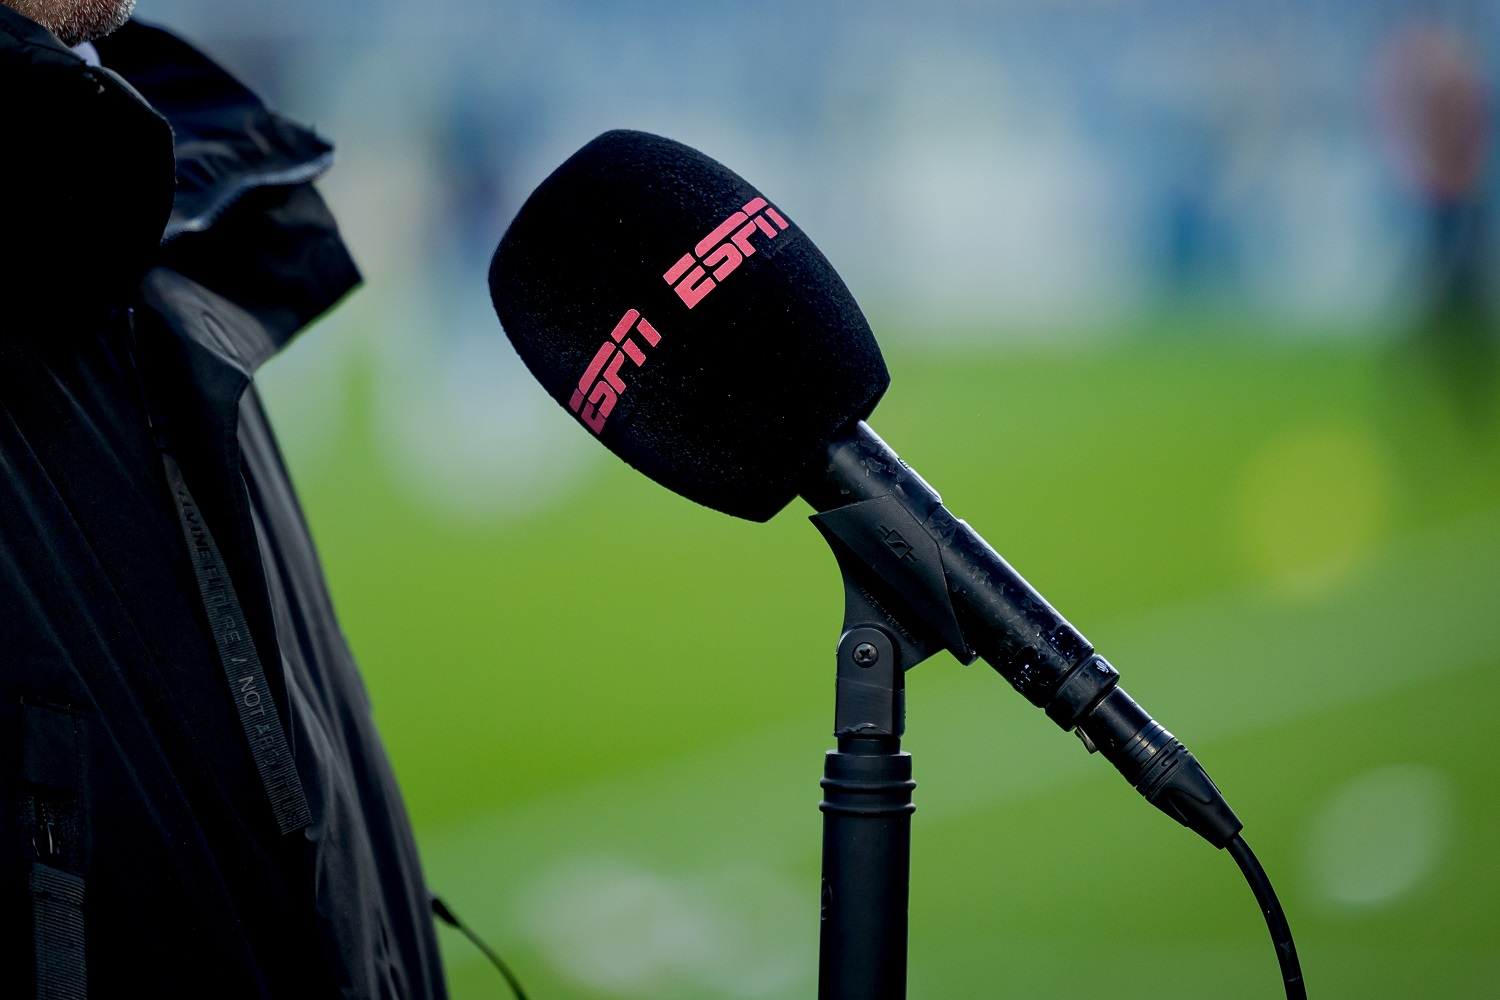 ESPN logo on microphone during the Dutch Eredivisie match between RKC Waalwijk and ADO Den Haag at the Mandemakers Stadium on Jan. 9, 2021 in Waalwijk Netherlands